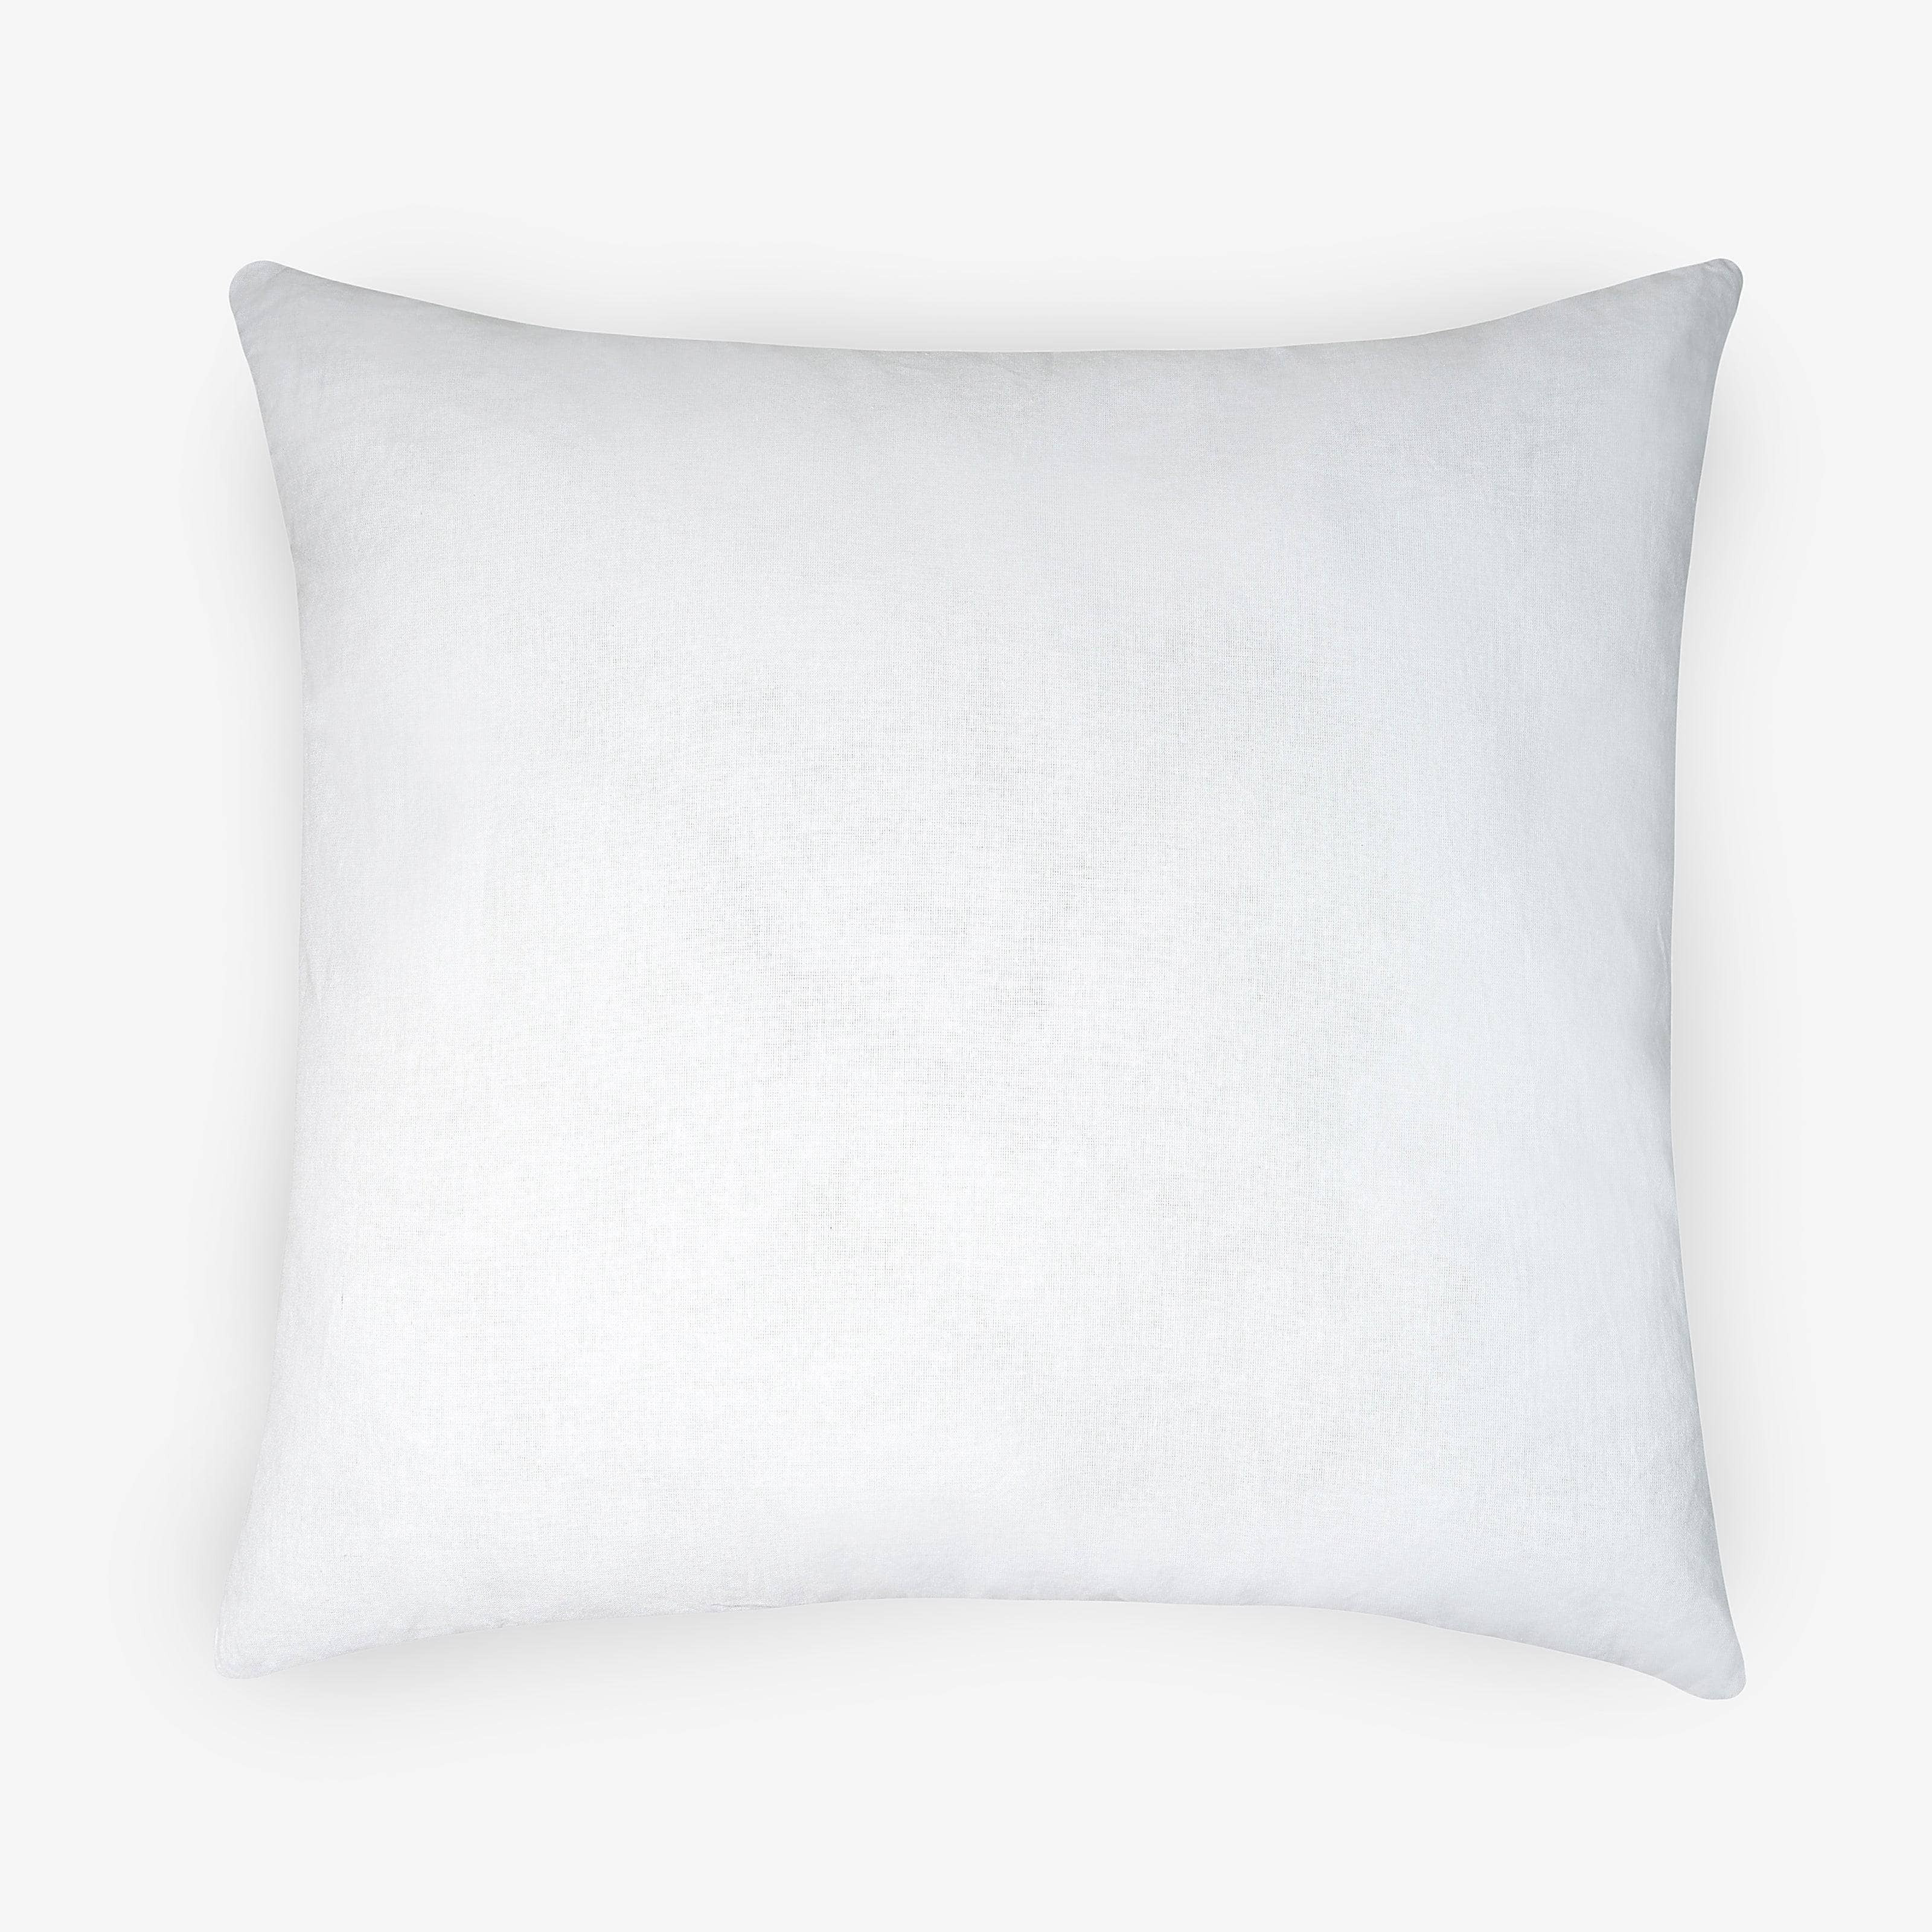 Large Square Cotton Cushion Pad, White, 60x60 cm